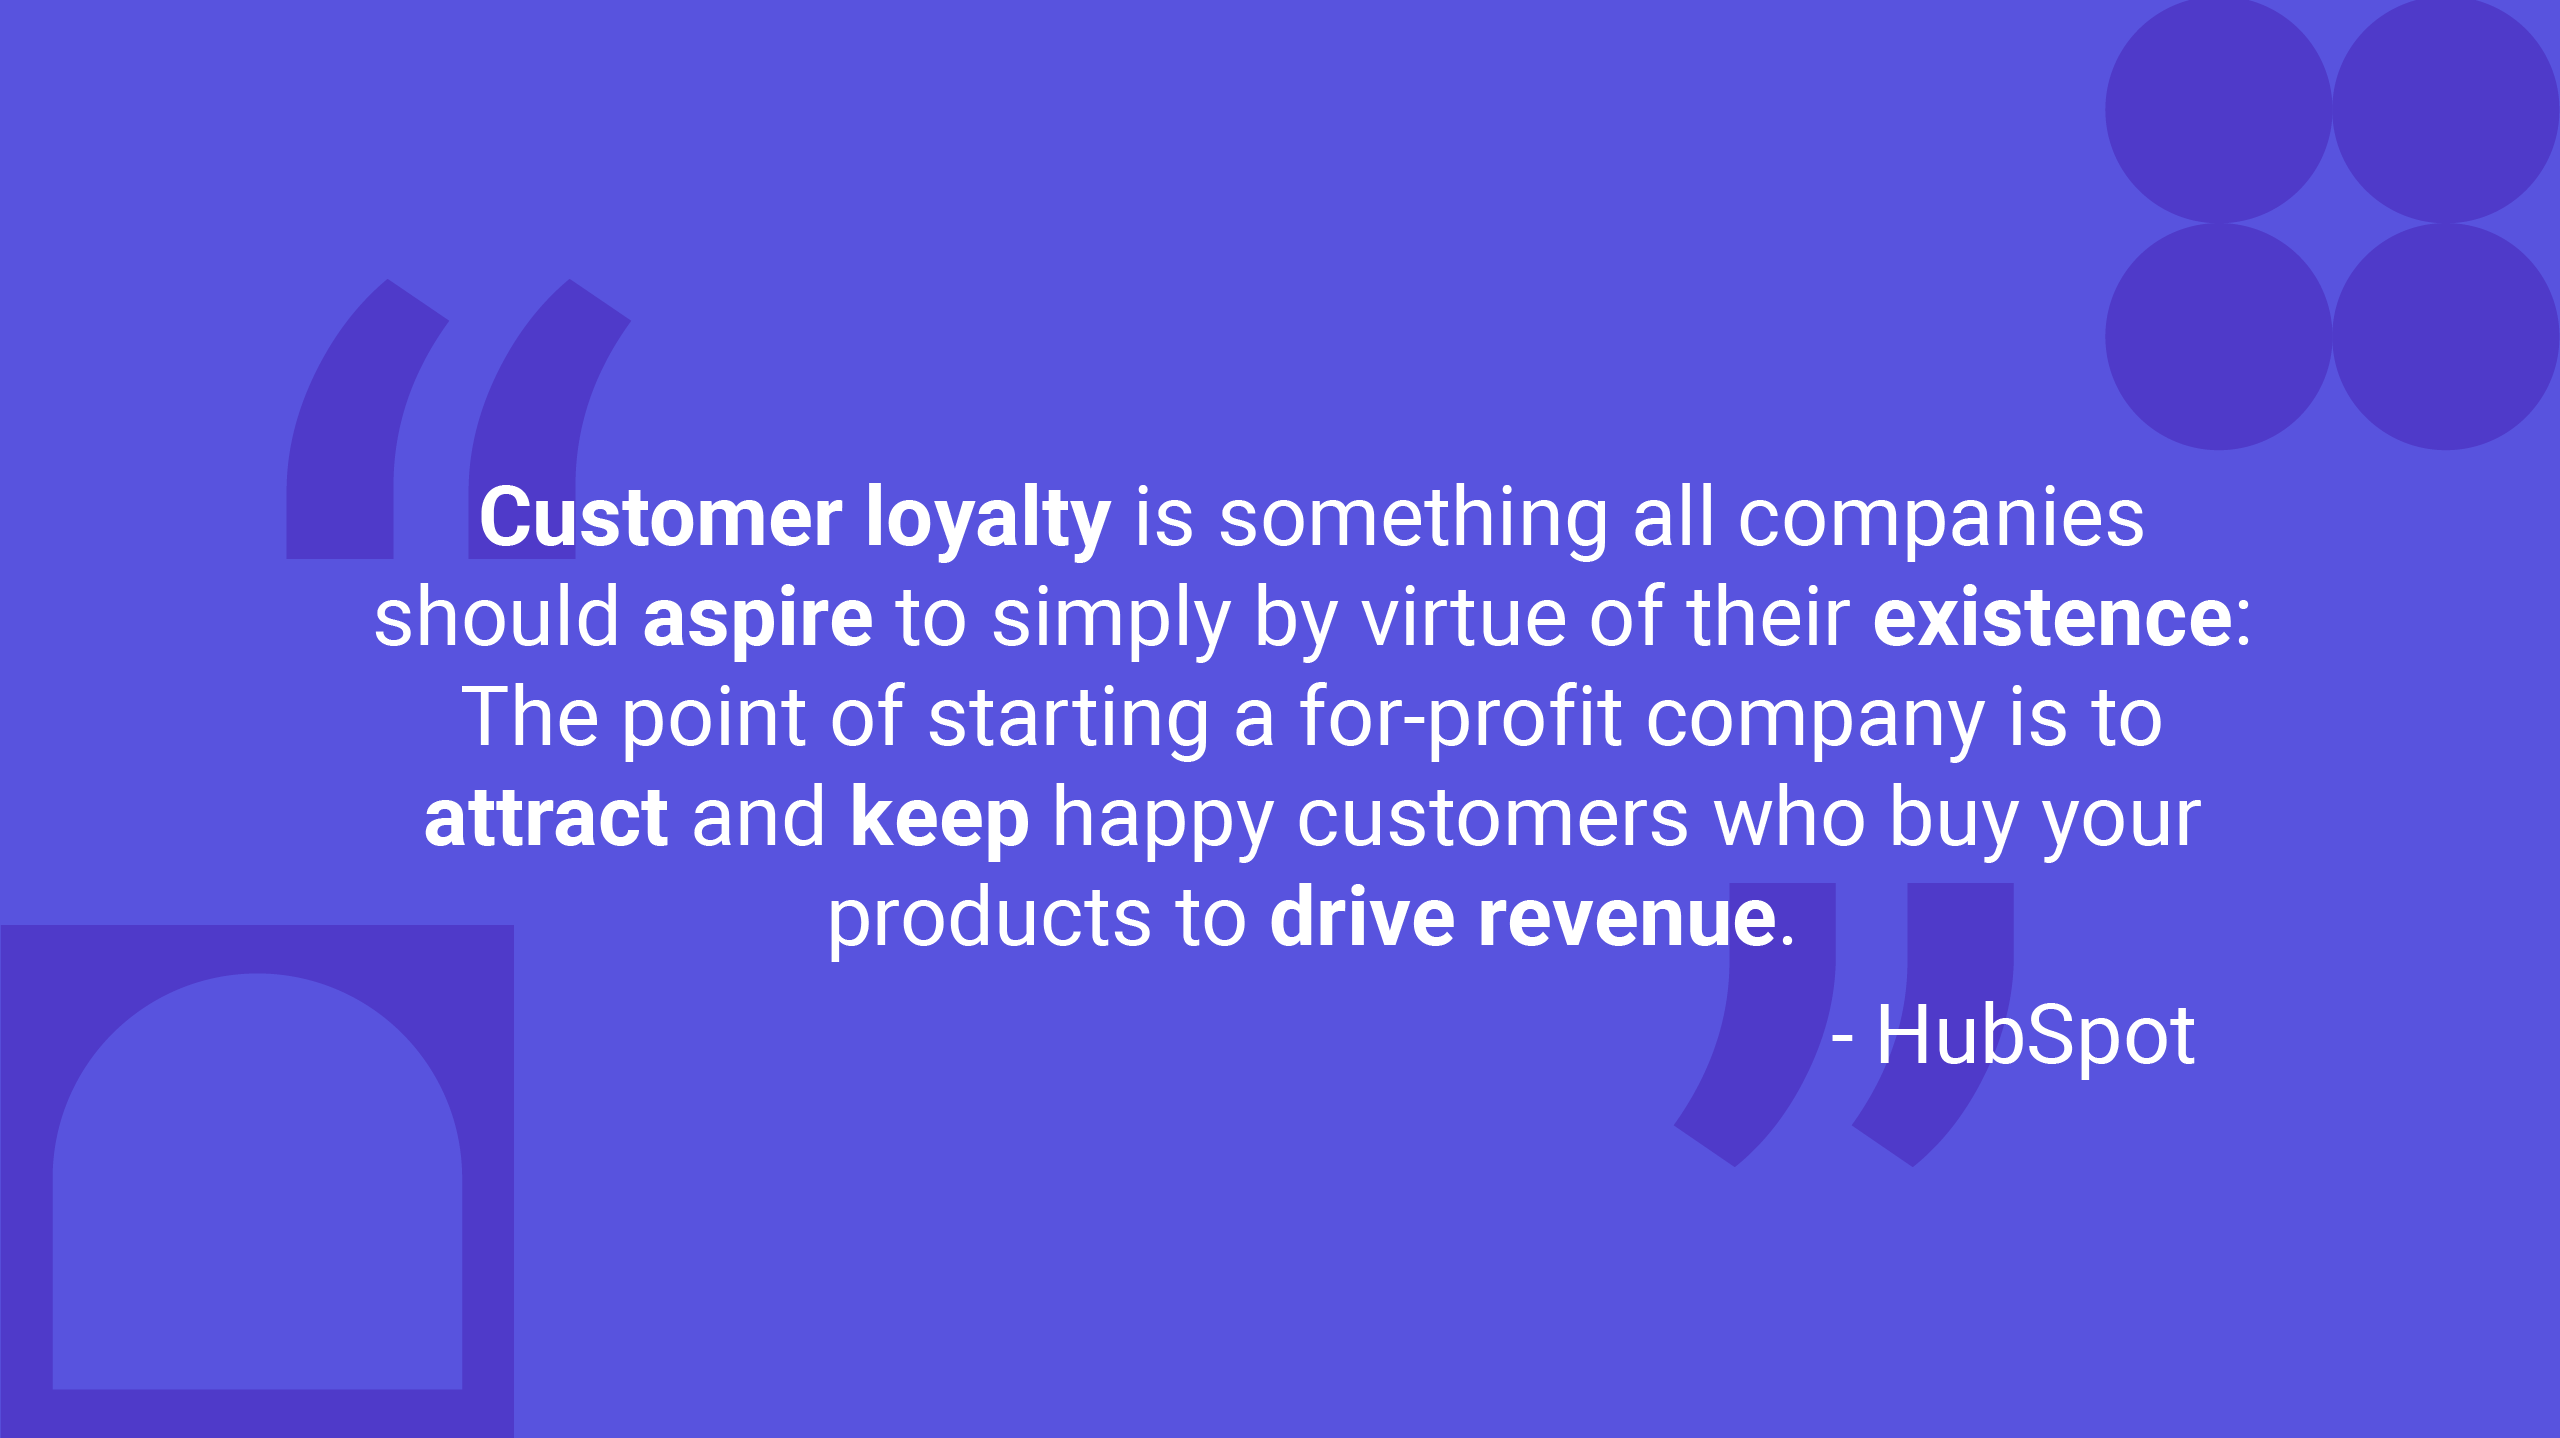 Customer loyalty according to HubSpot